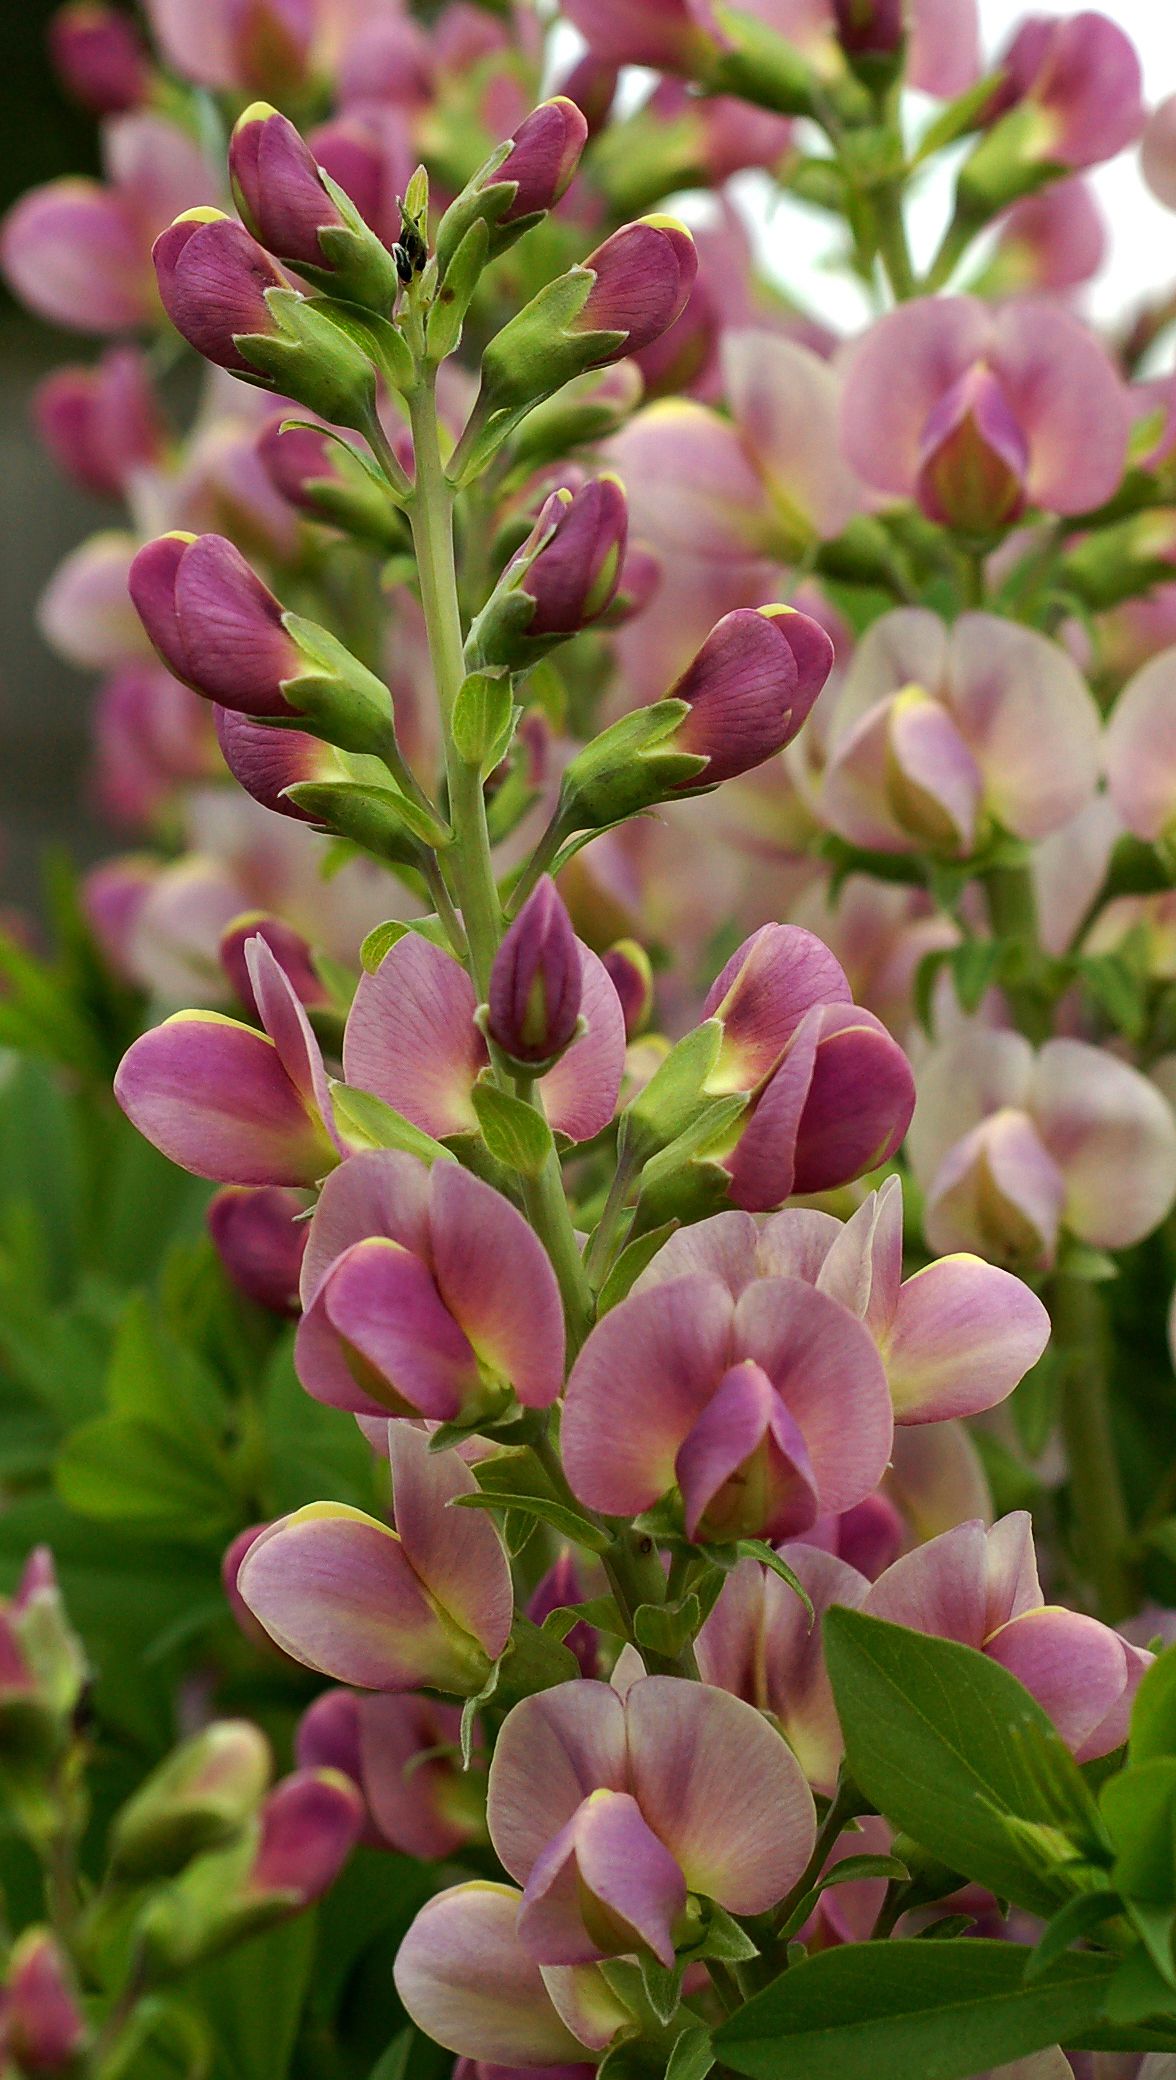 images/plants/baptisia/bap-lavendar-rose/bap-lavendar-rose-0005.jpg